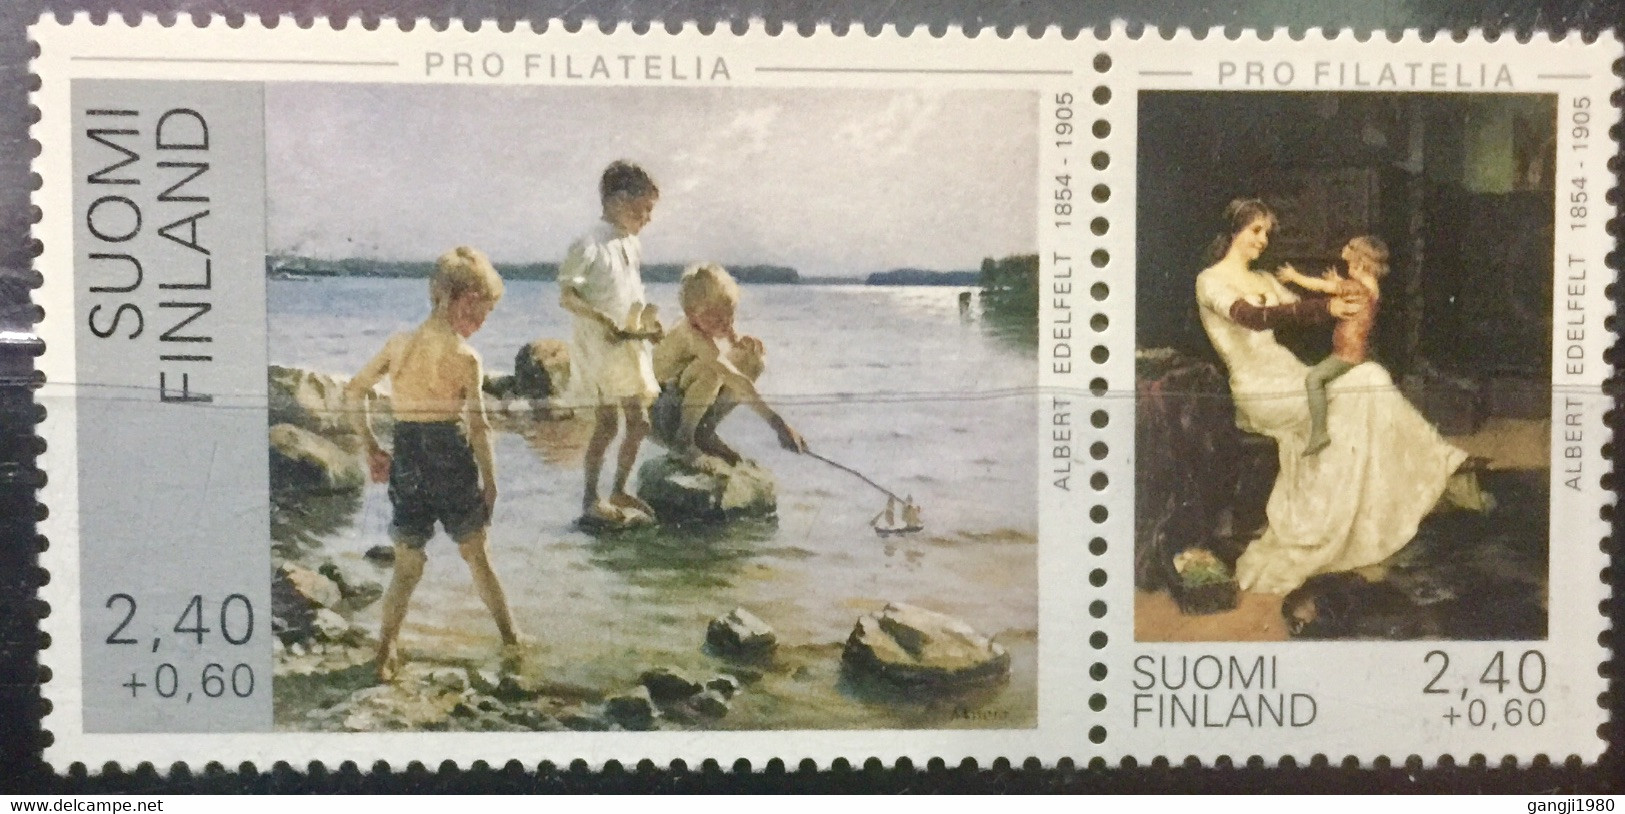 FINLAND 1995 MNH STAMP ON ART ALBERT EDELFELT SE-TENANT - Unused Stamps